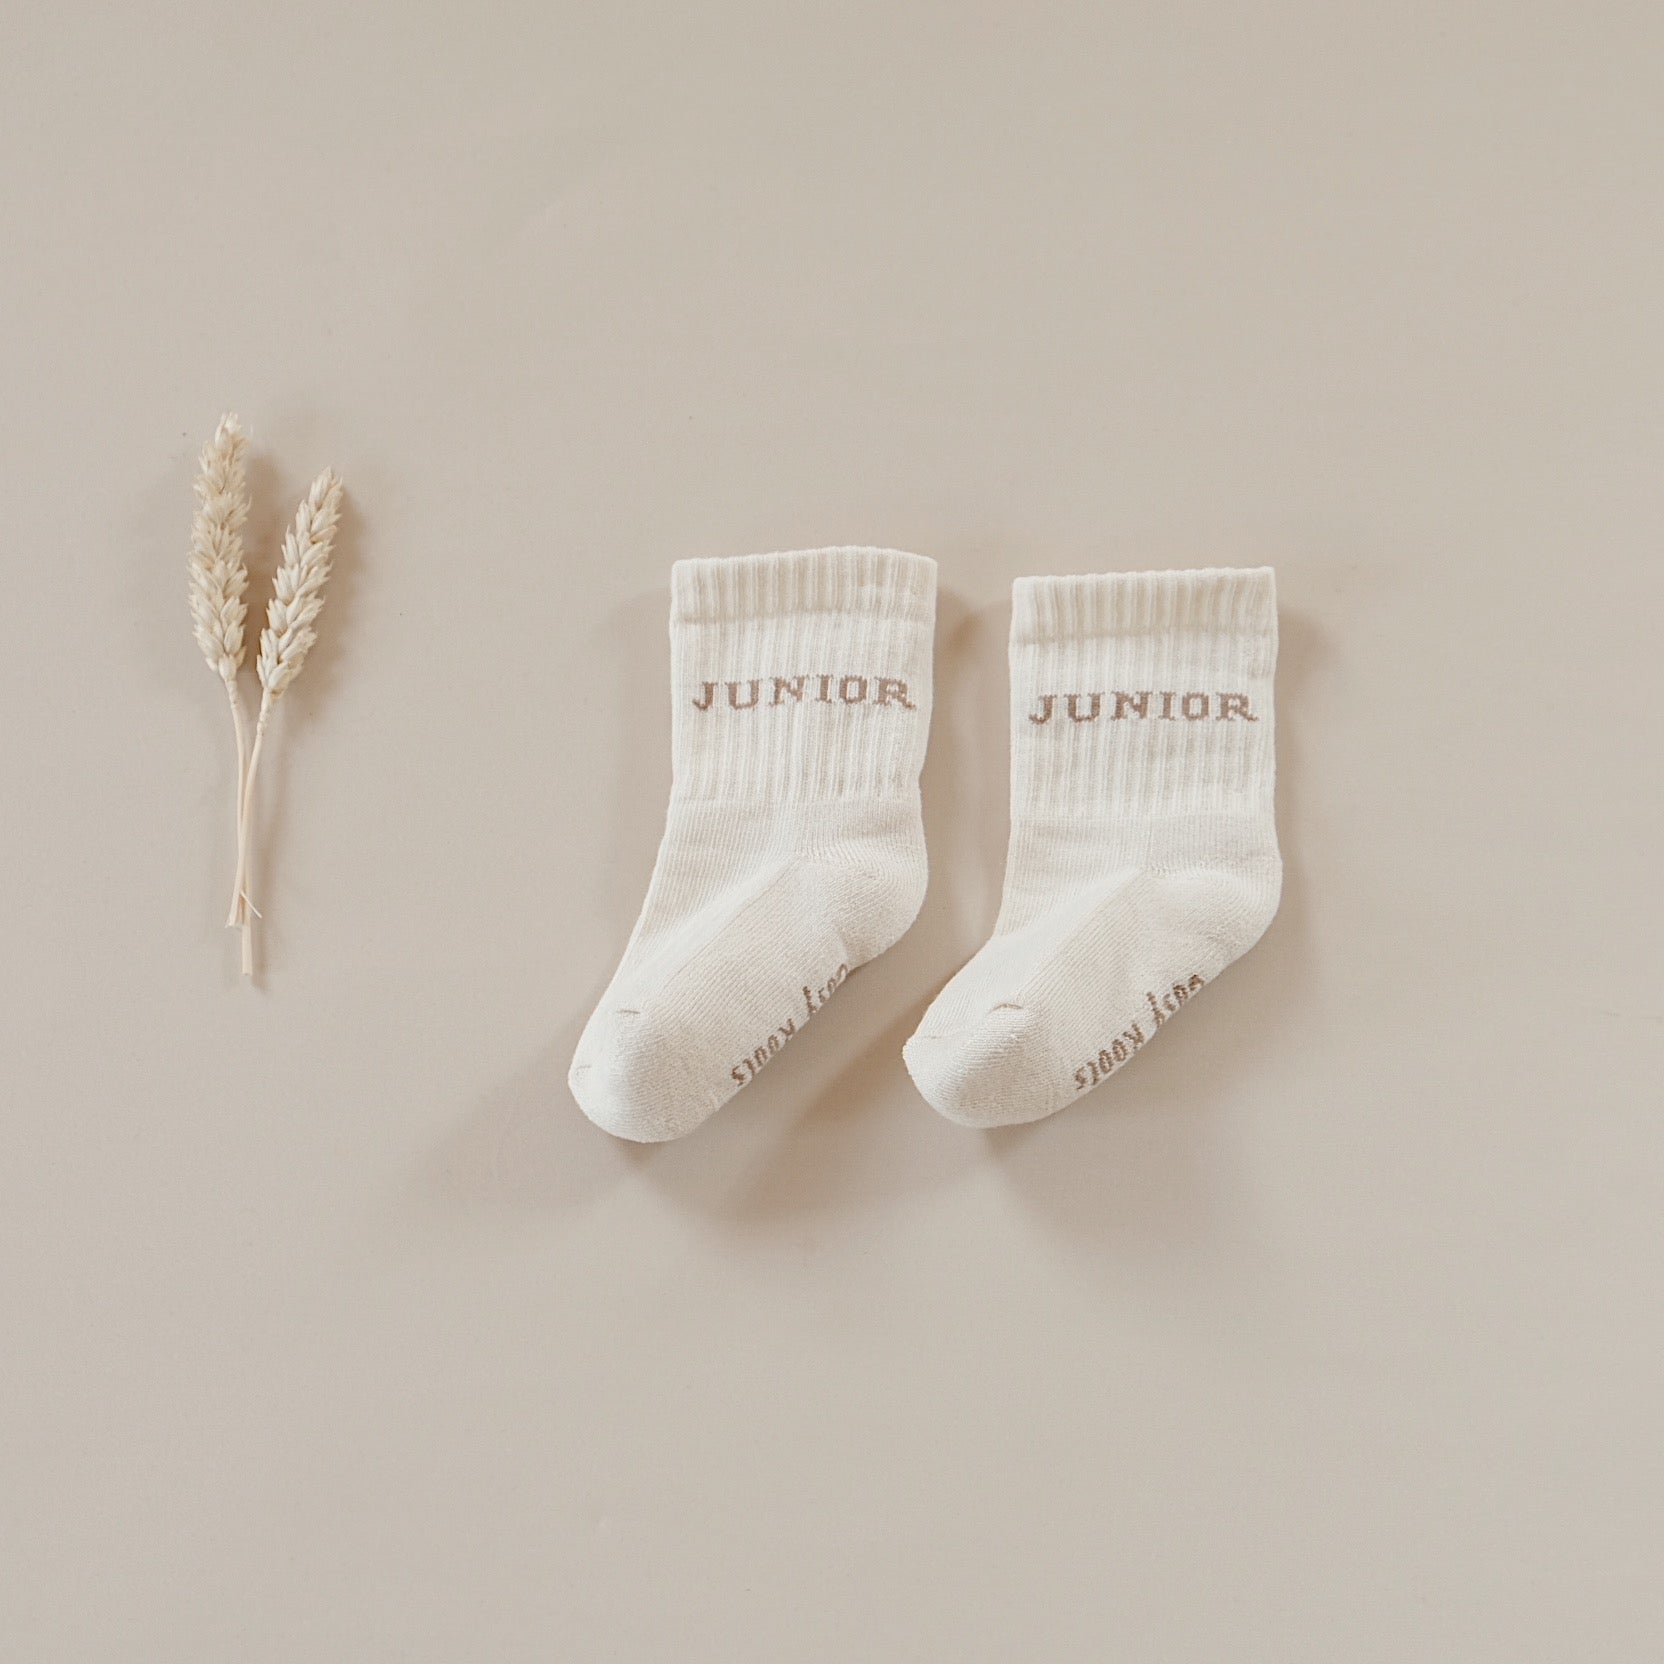 Organic Socks - JUNIOR - Sand